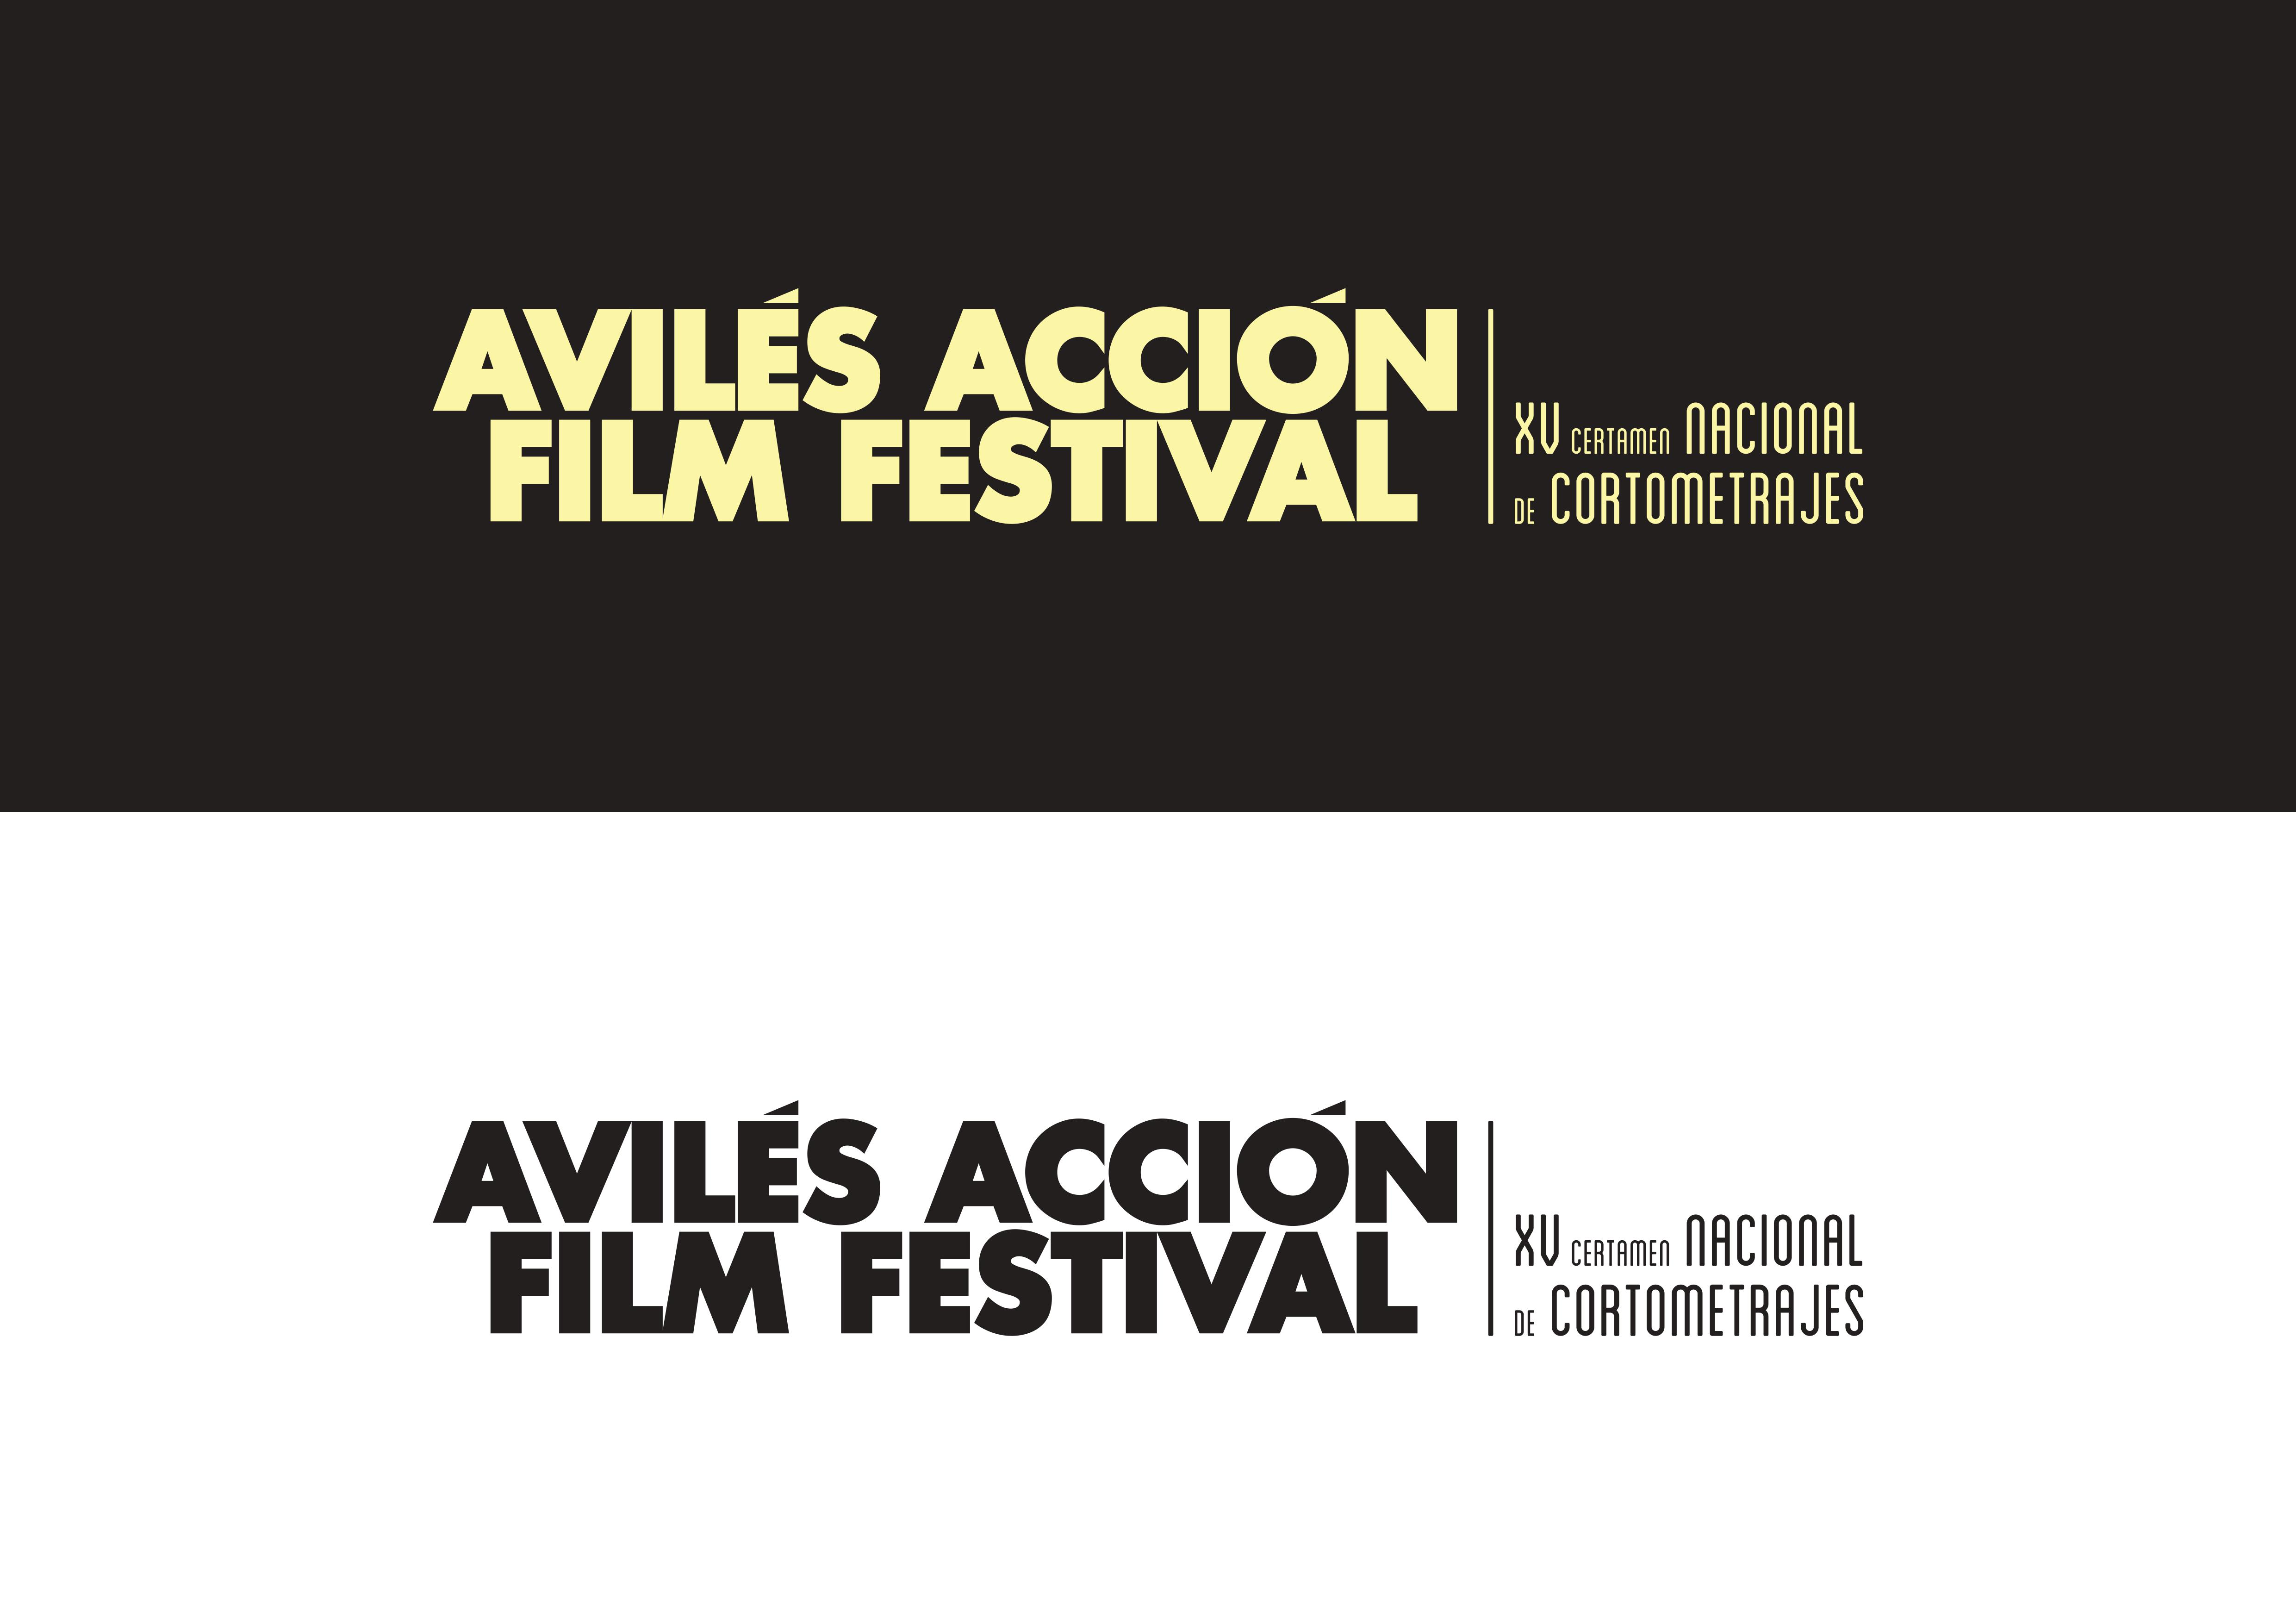 Avilés Acción Film Festival